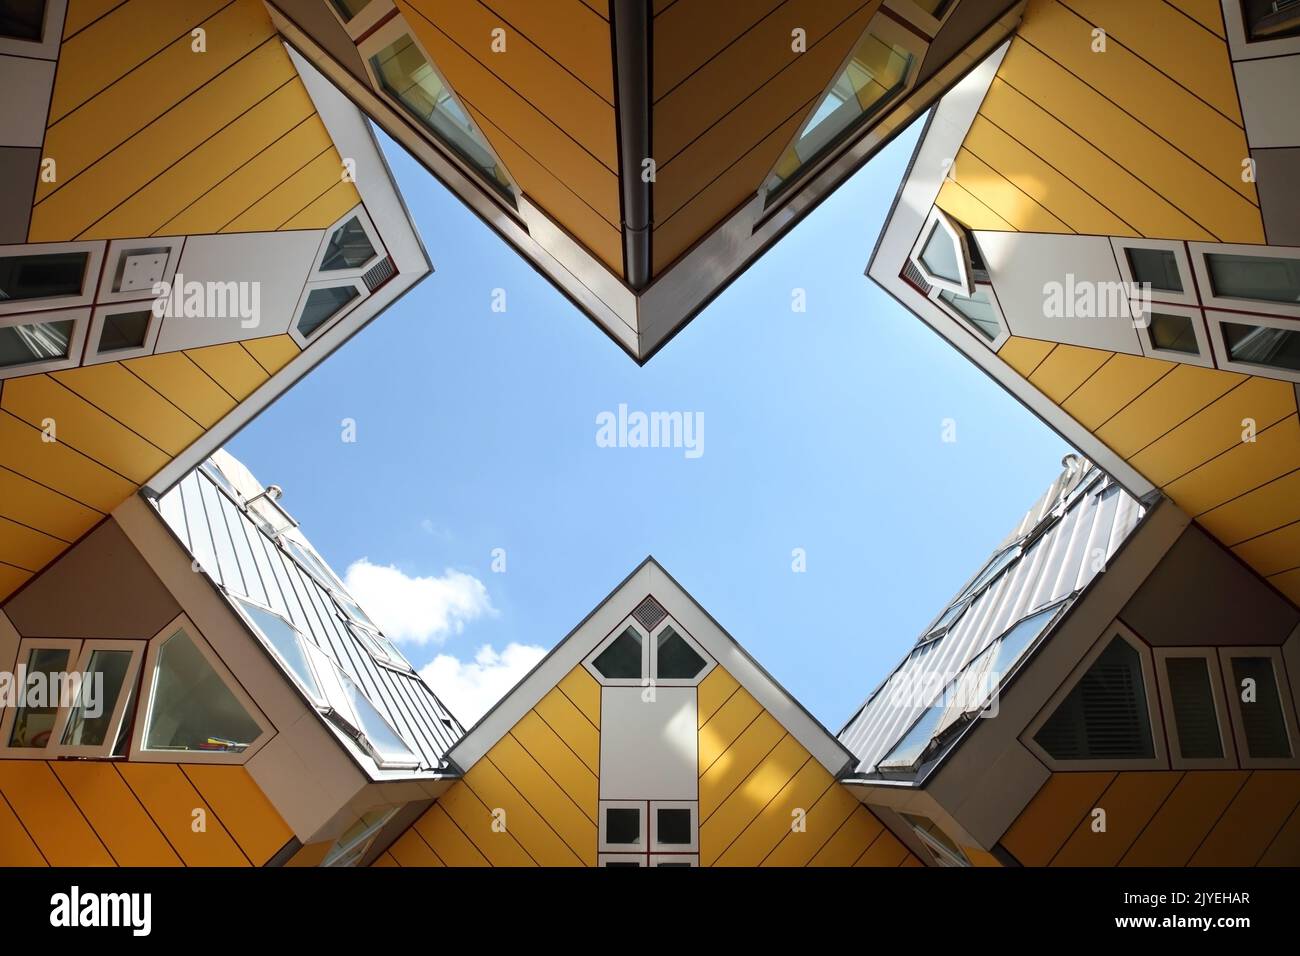 The Cube Houses (Kubuswoningen) designed by Piet Blom, Rotterdam, Netherlands. Stock Photo